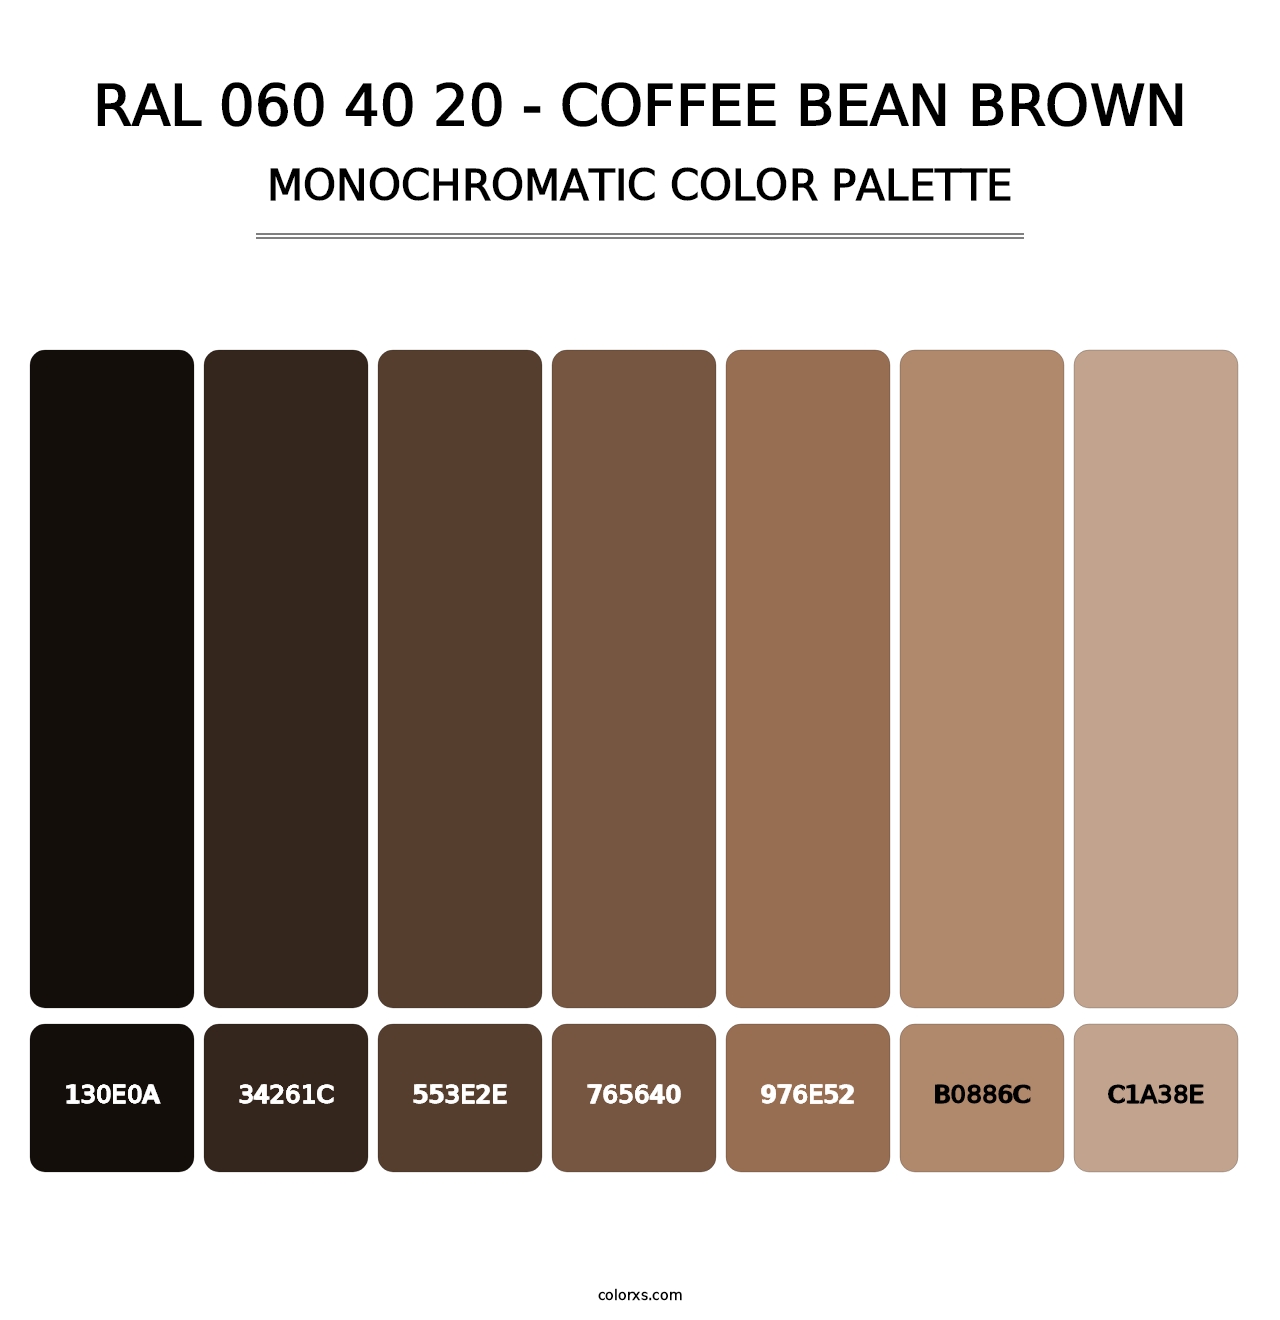 RAL 060 40 20 - Coffee Bean Brown - Monochromatic Color Palette